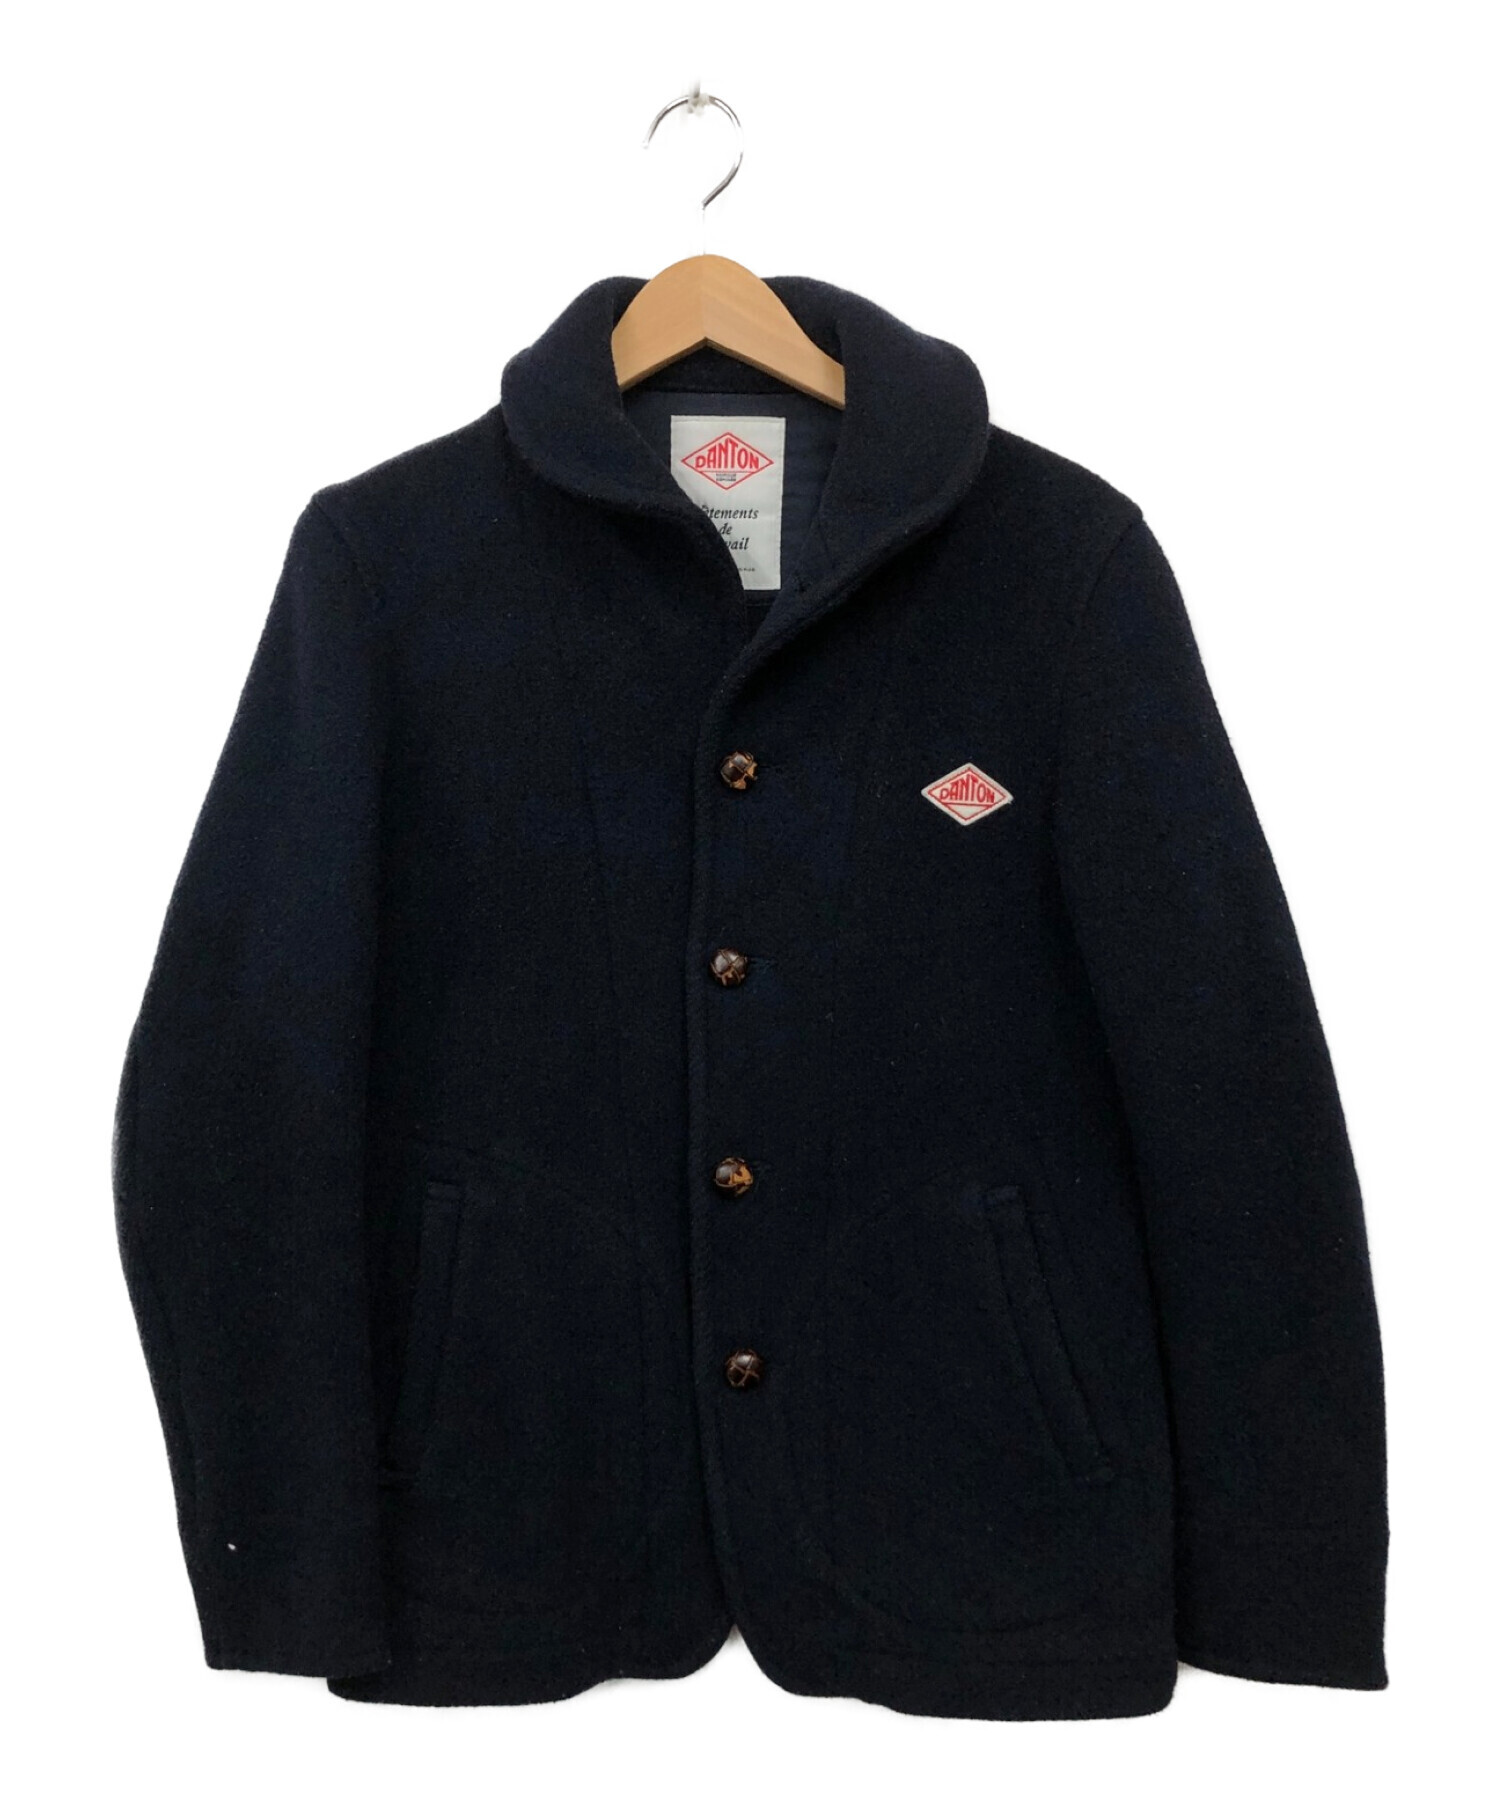 DANTON (ダントン) ウールジャケット ブラック サイズ:38